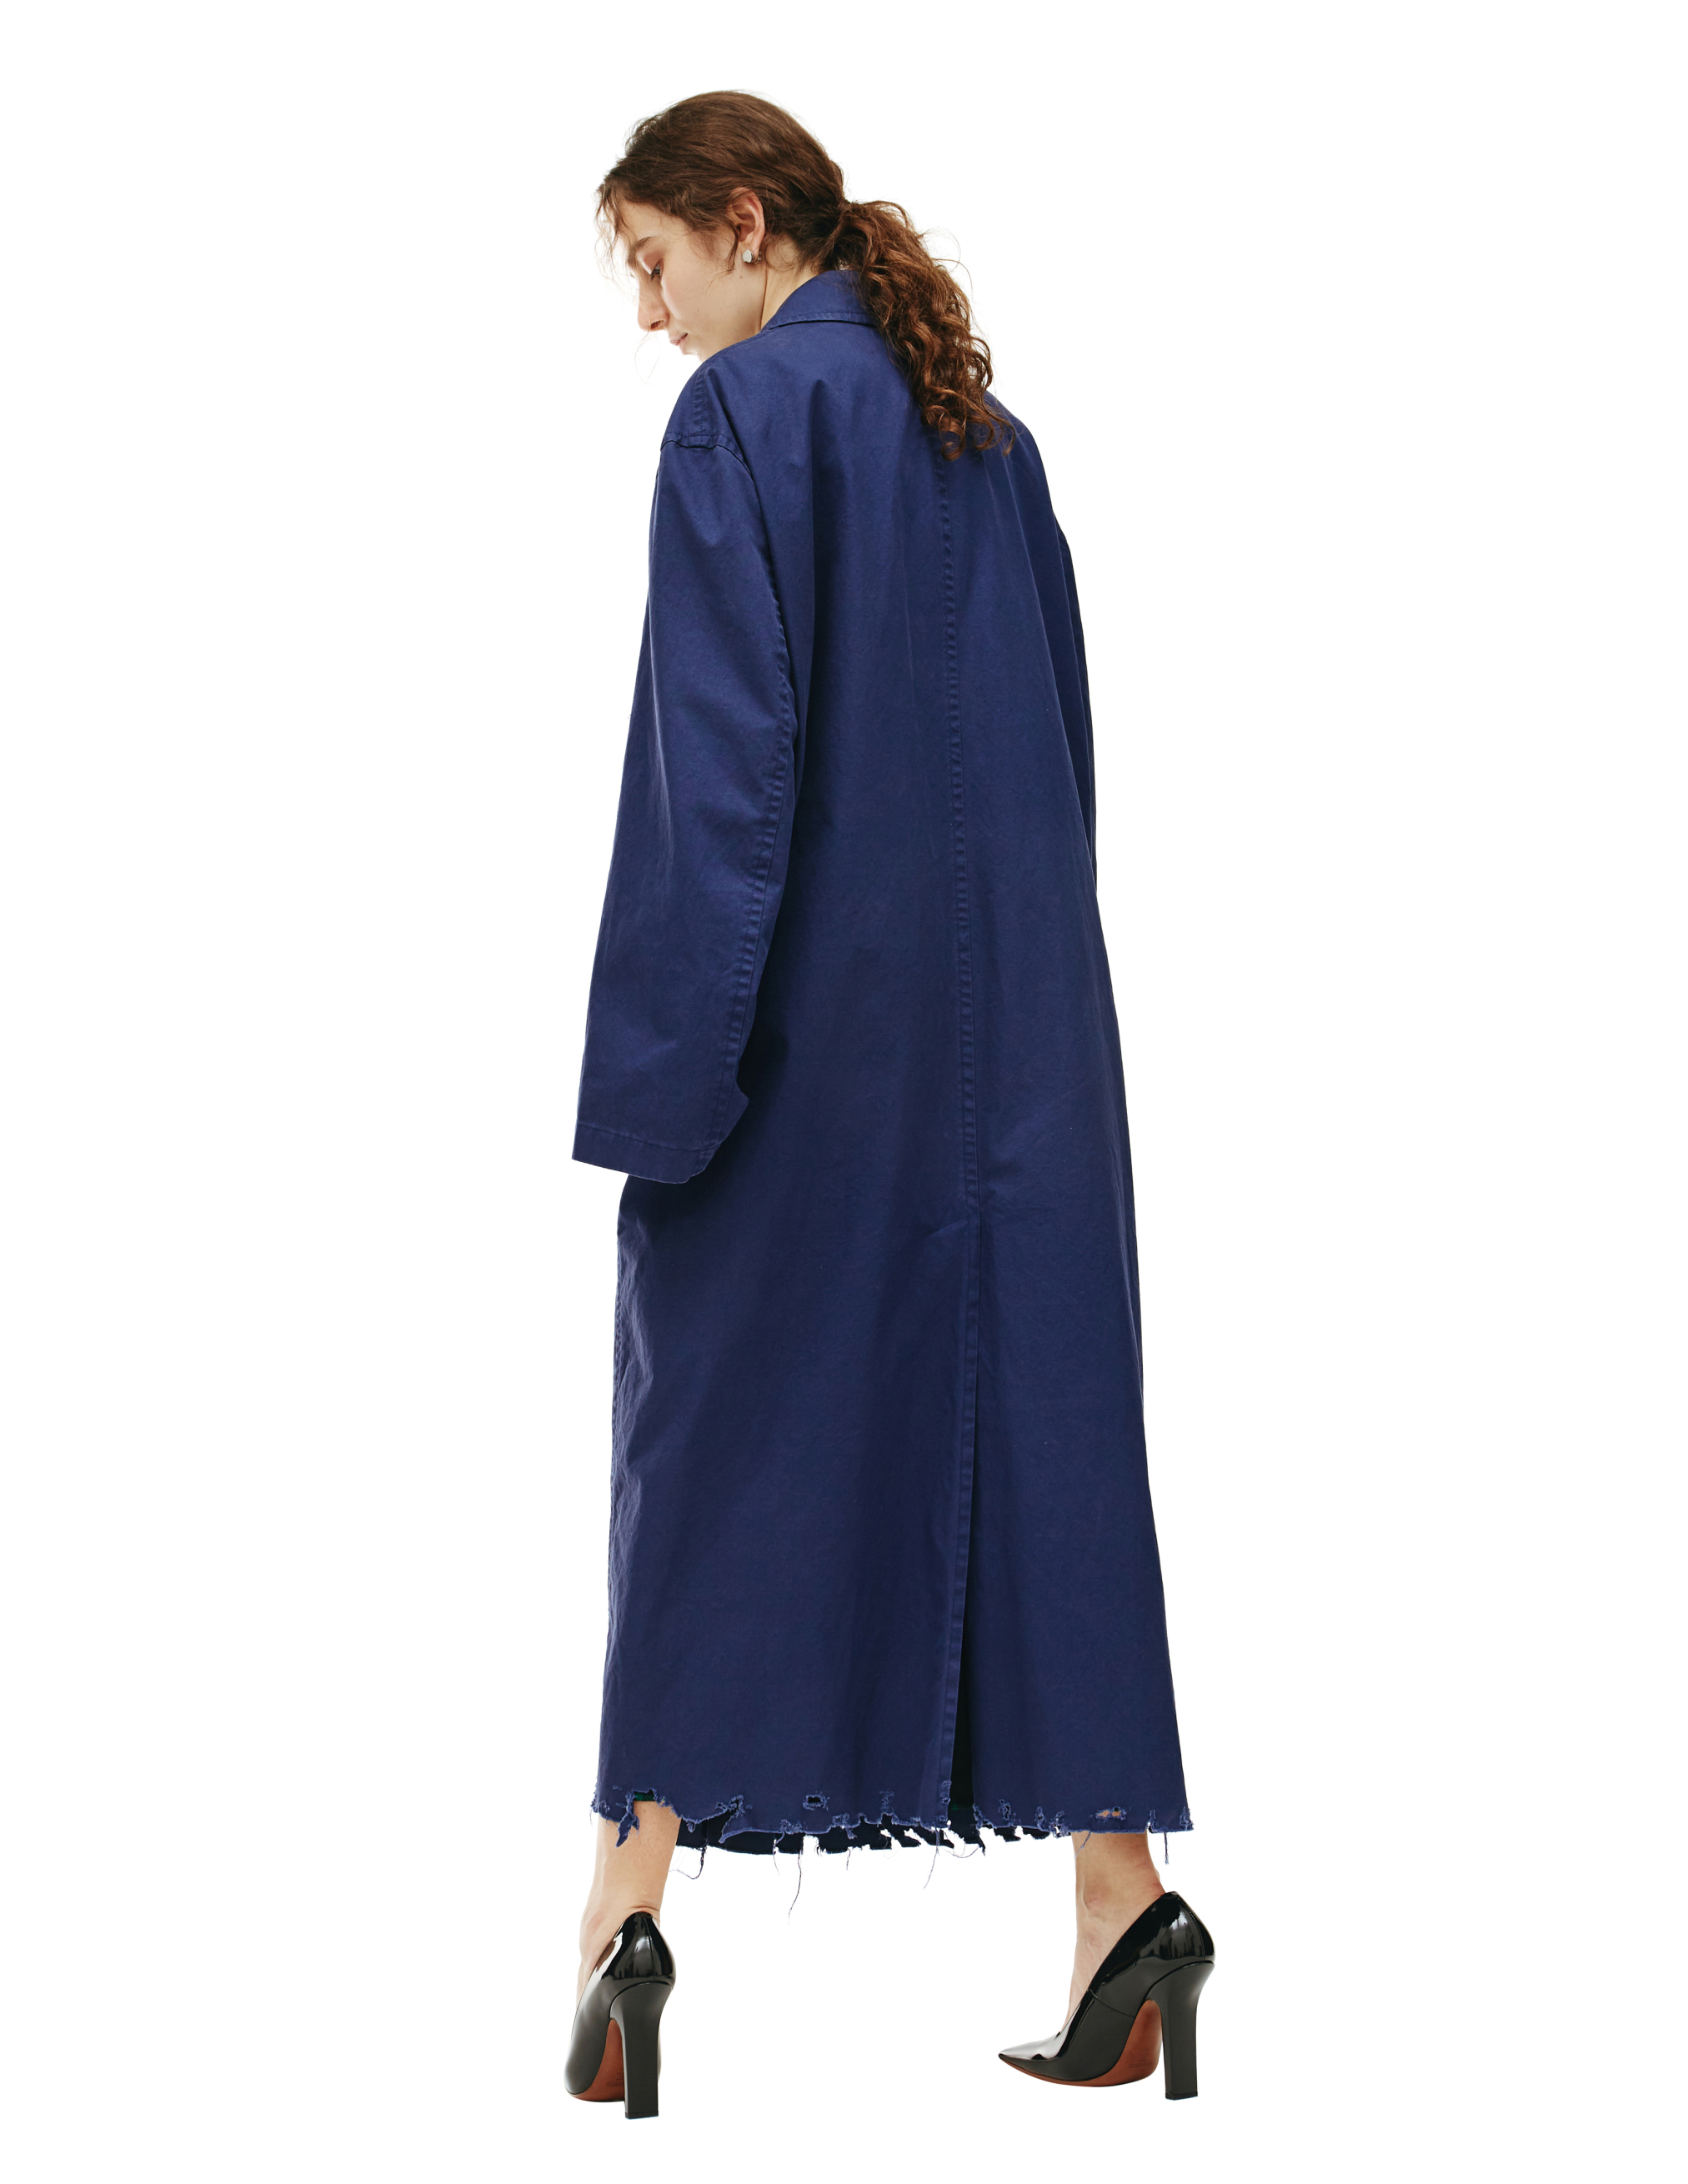 Оверсайз пальто с клетчатым подкладом Balenciaga 681165/TKP06/4140, размер 3 681165/TKP06/4140 - фото 4